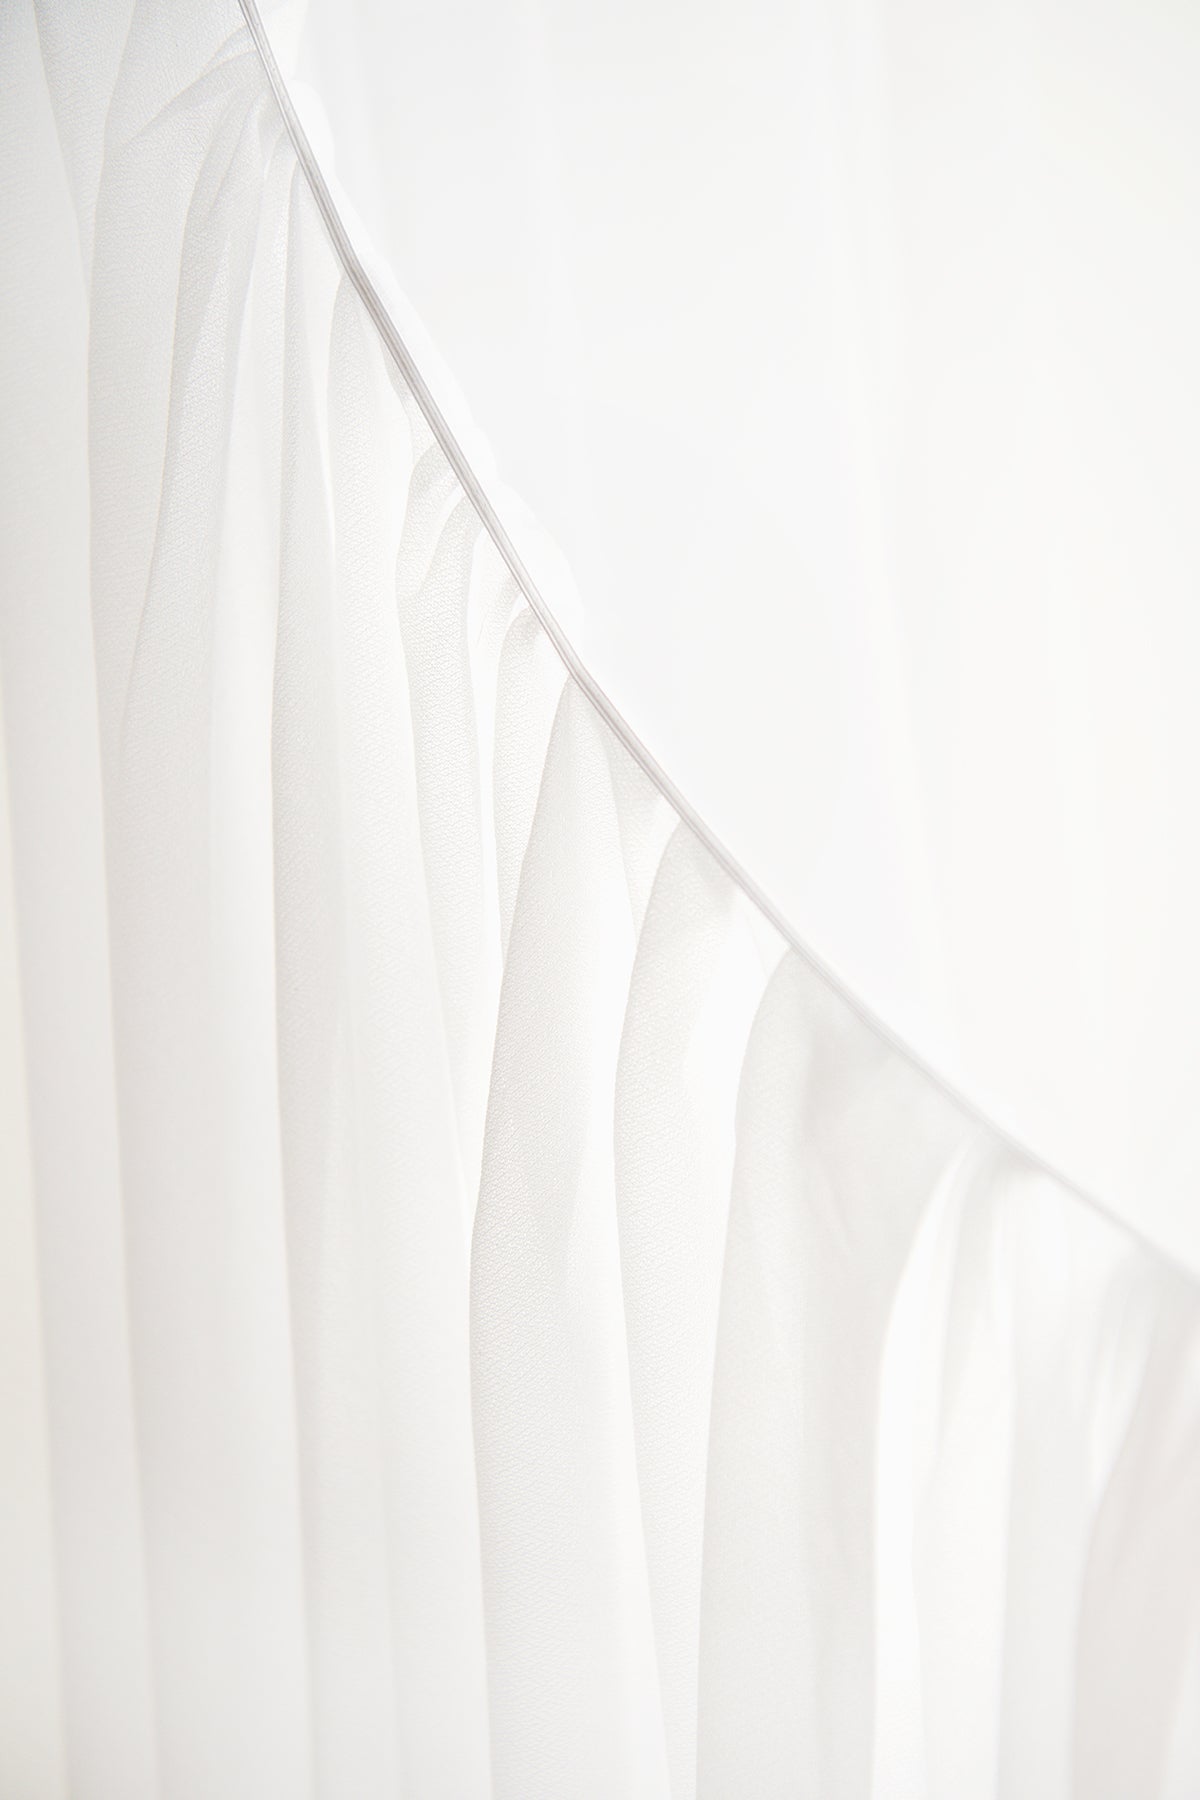 Wedding Arch Drapes in White & Beige